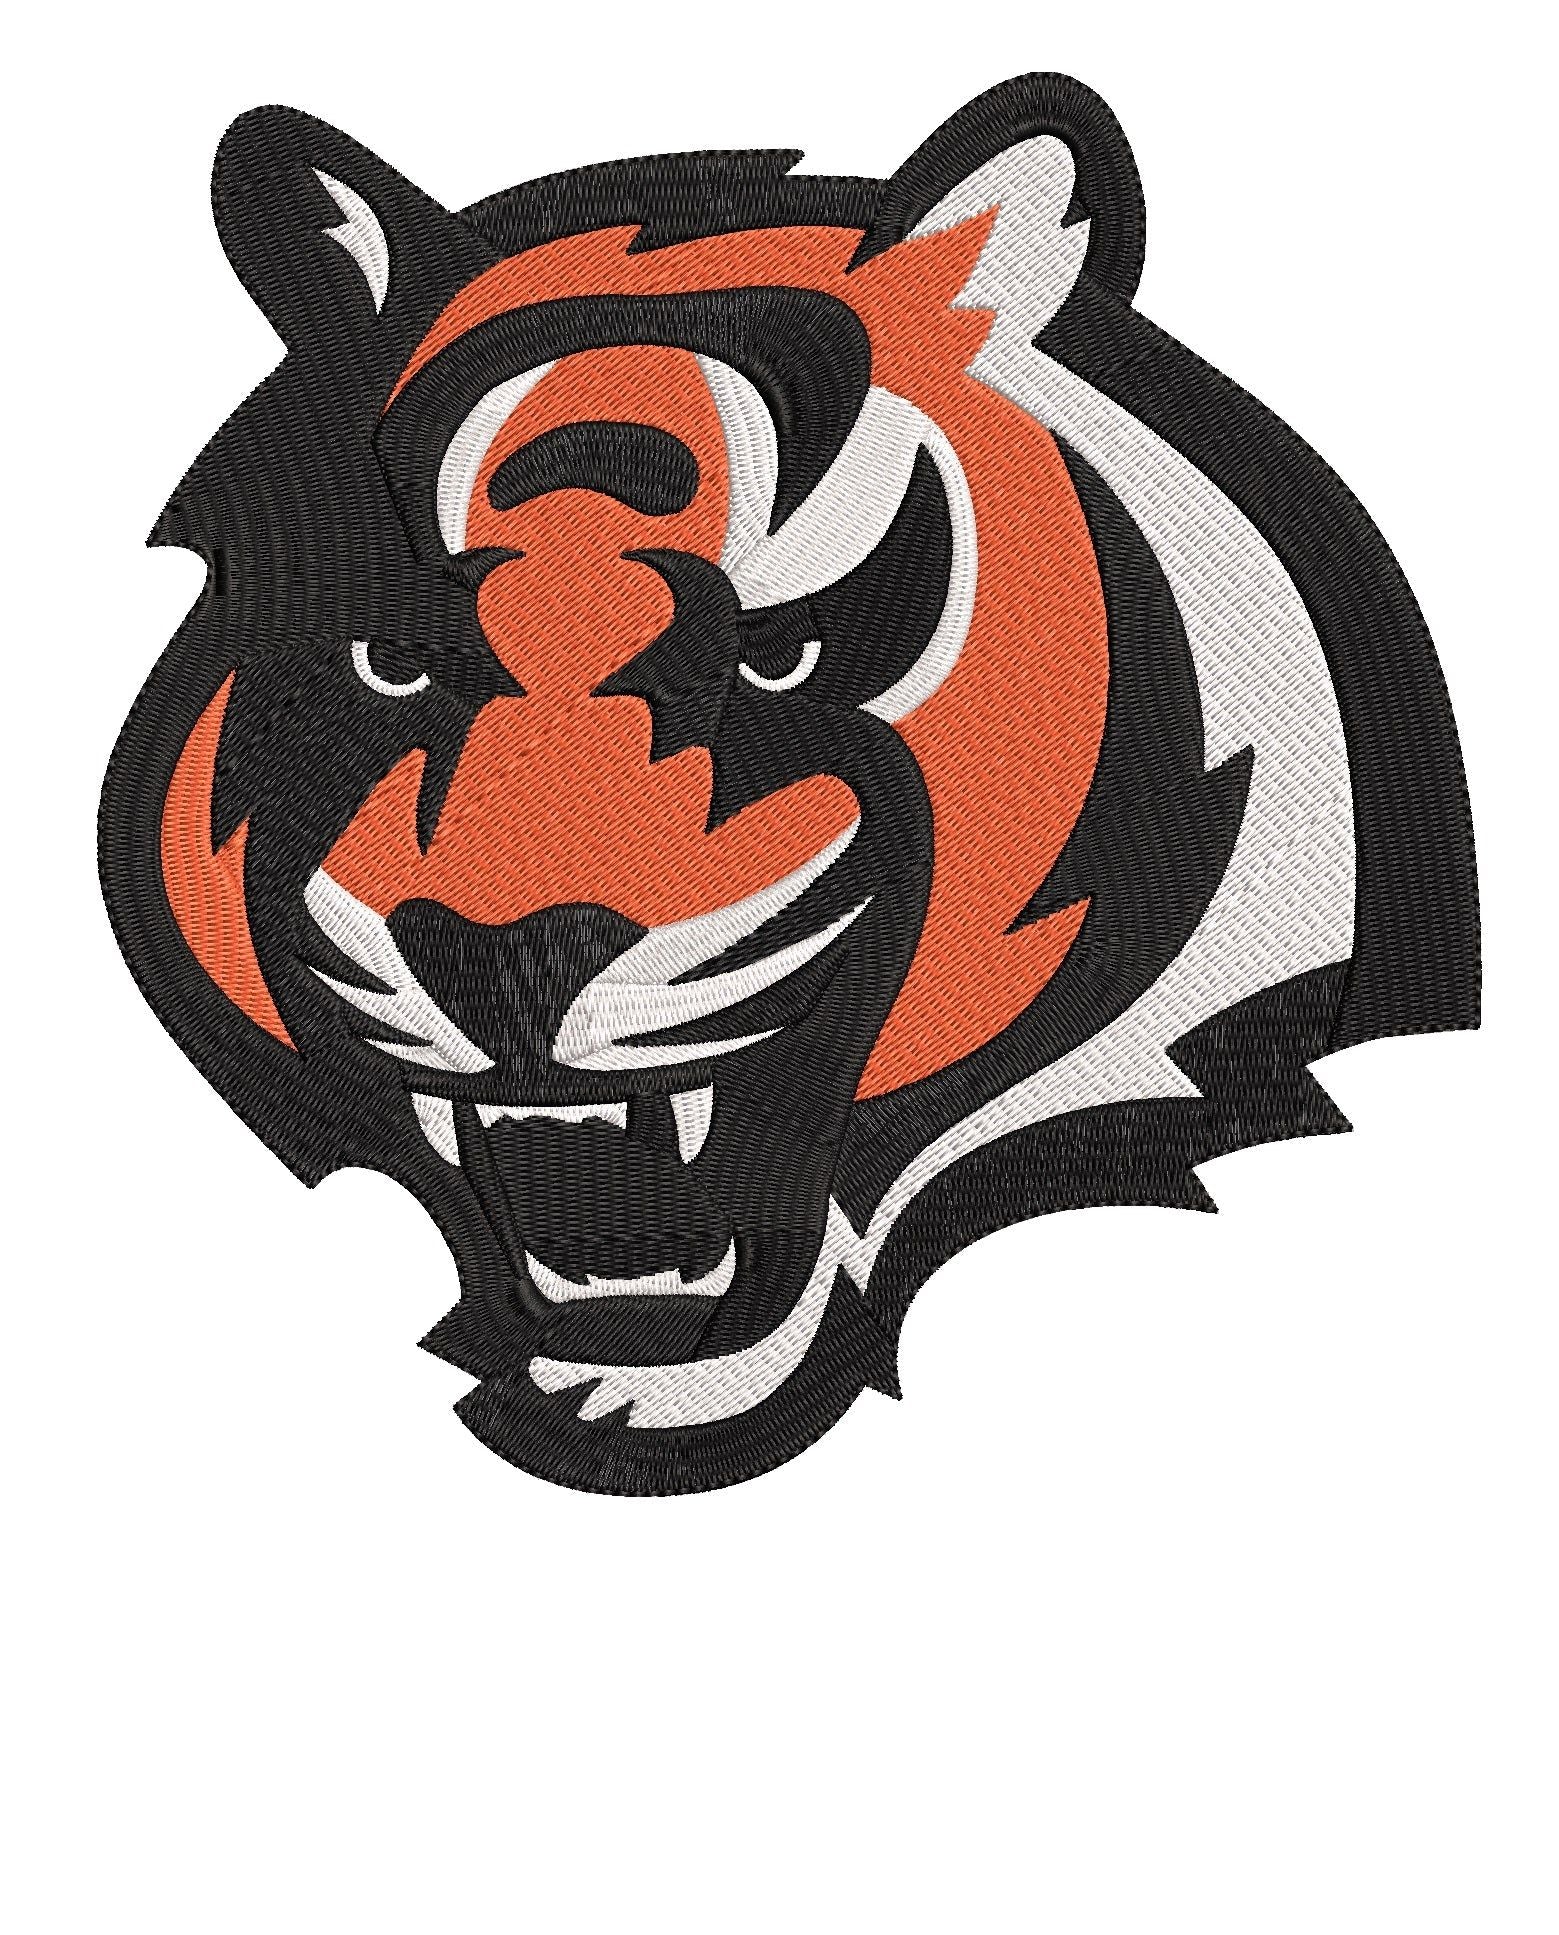 Cincinnati Bengals Embroidery Design 4 - FineryEmbroidery